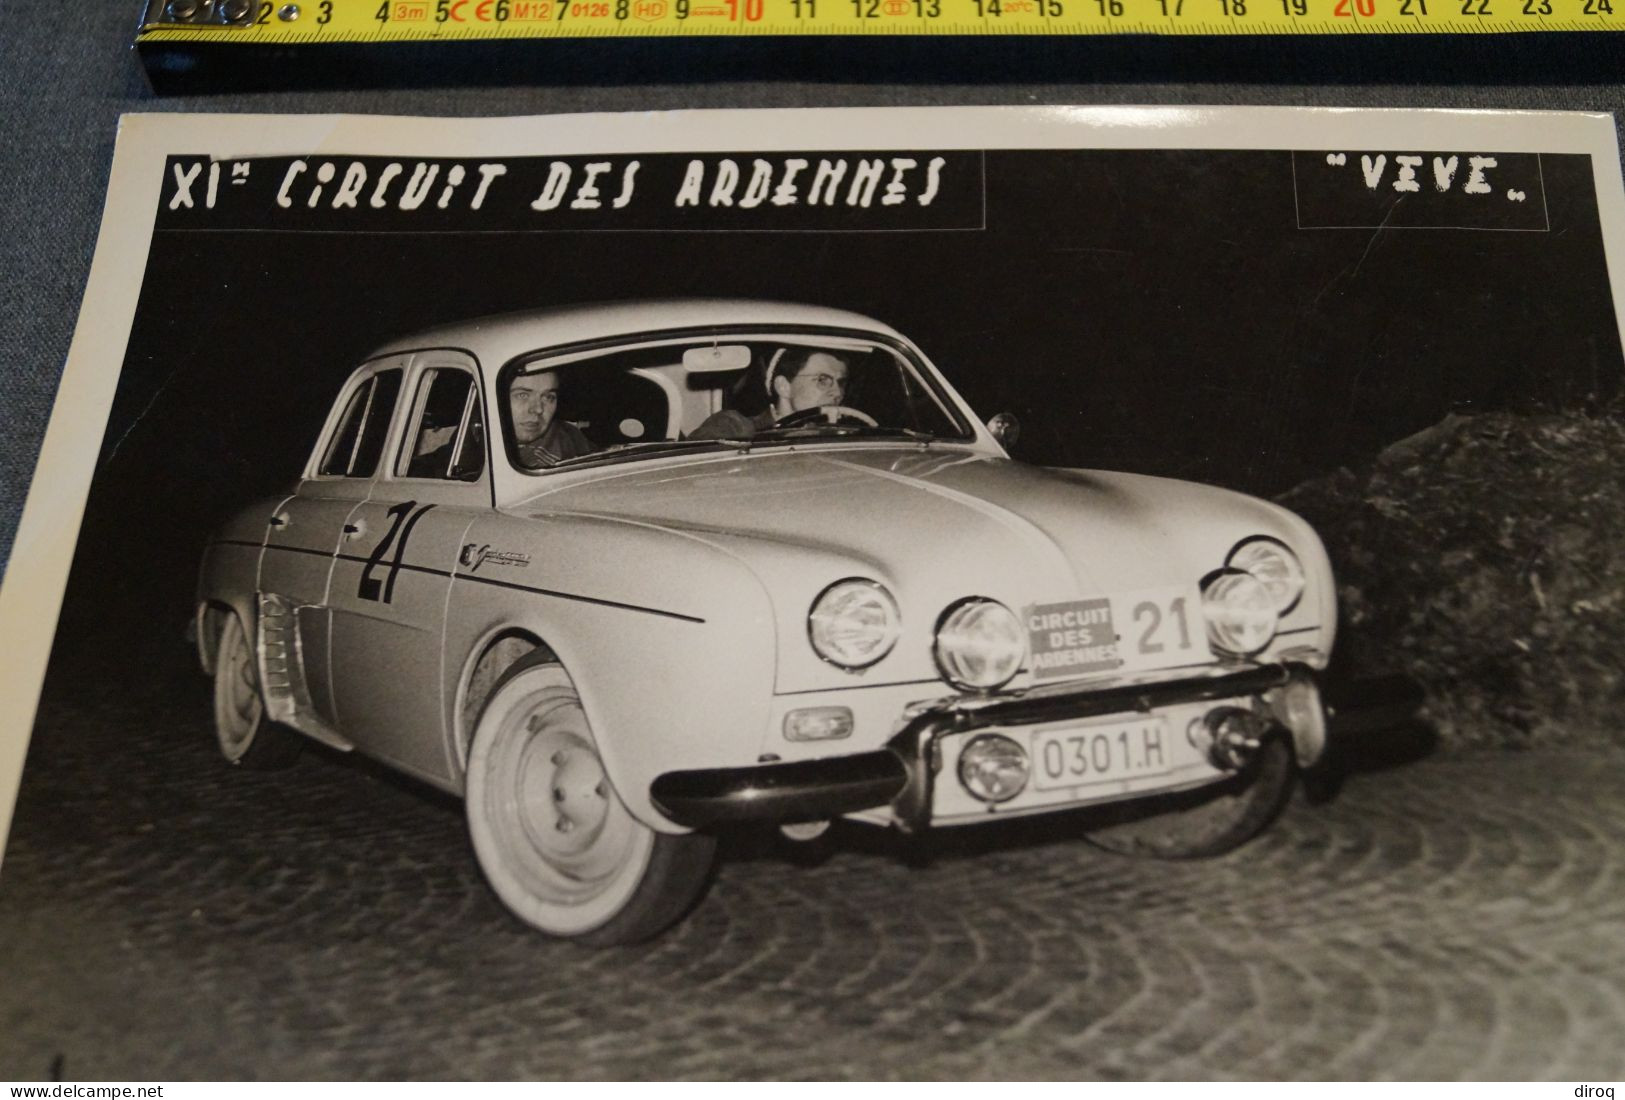 11 Iem Rallye Des Ardennes,grande Photo Originale, 24 Cm. Sur 18 Cm. - Automobile